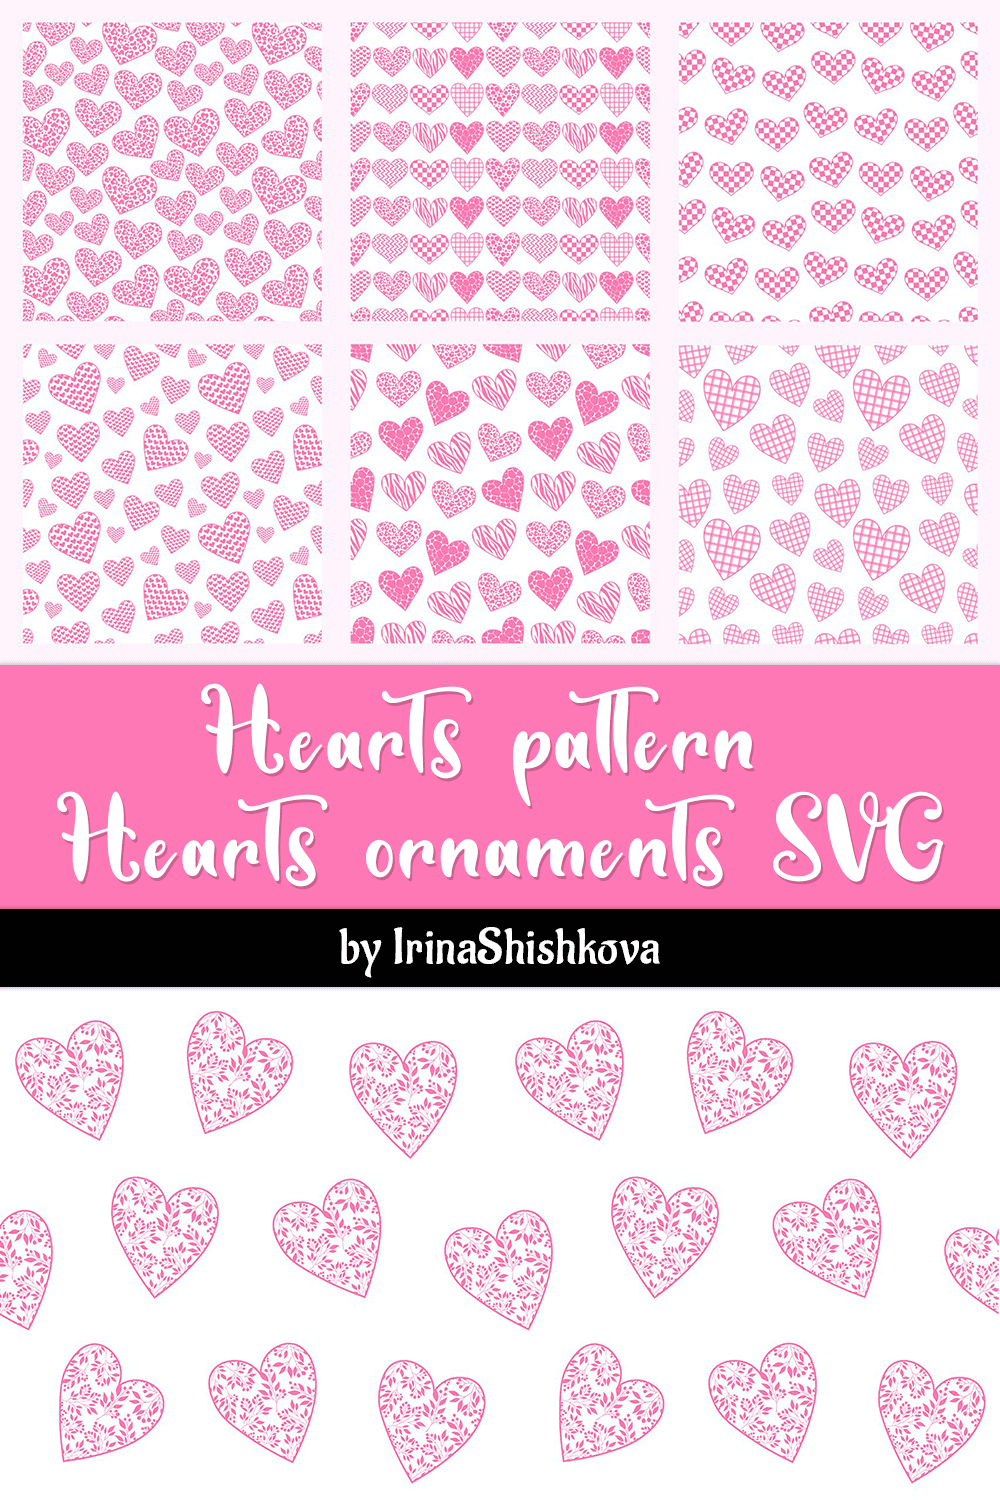 Hearts Pattern. Hearts Ornaments SVG - Pinterest.